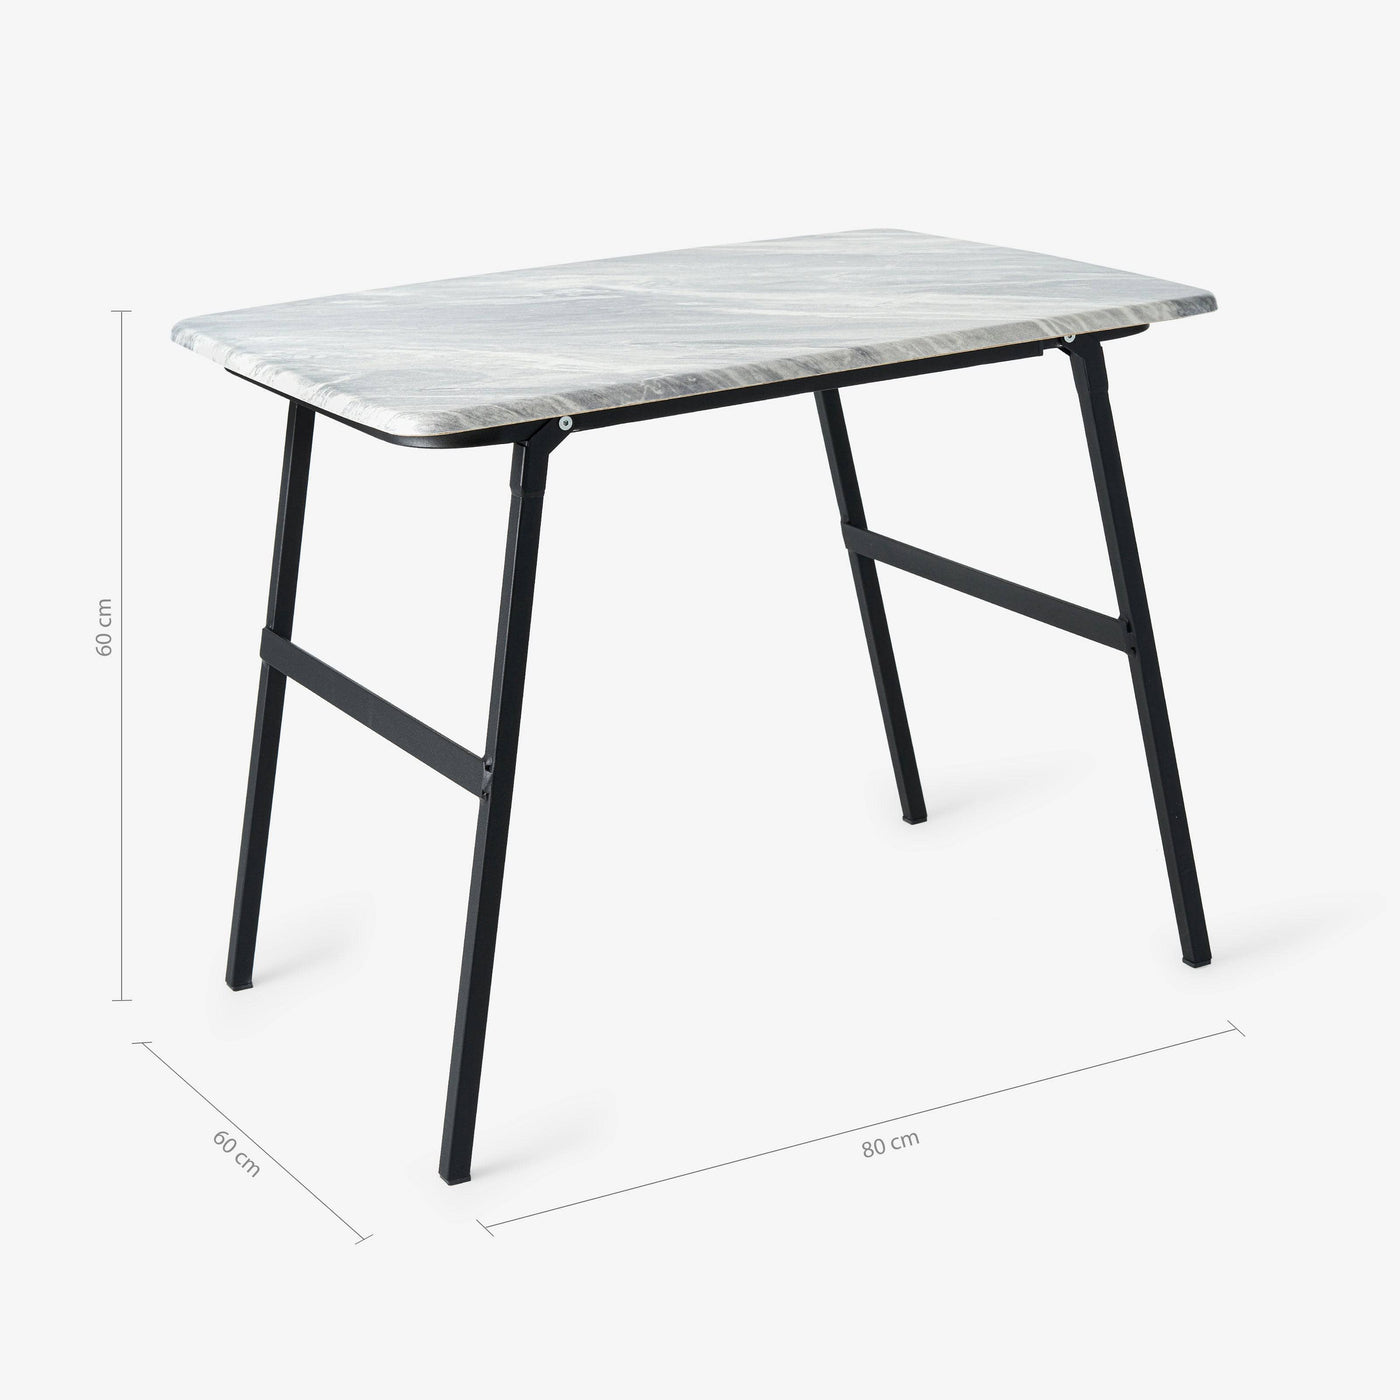 Lavantis Folding Table, Black, 60x80x60cm - 2